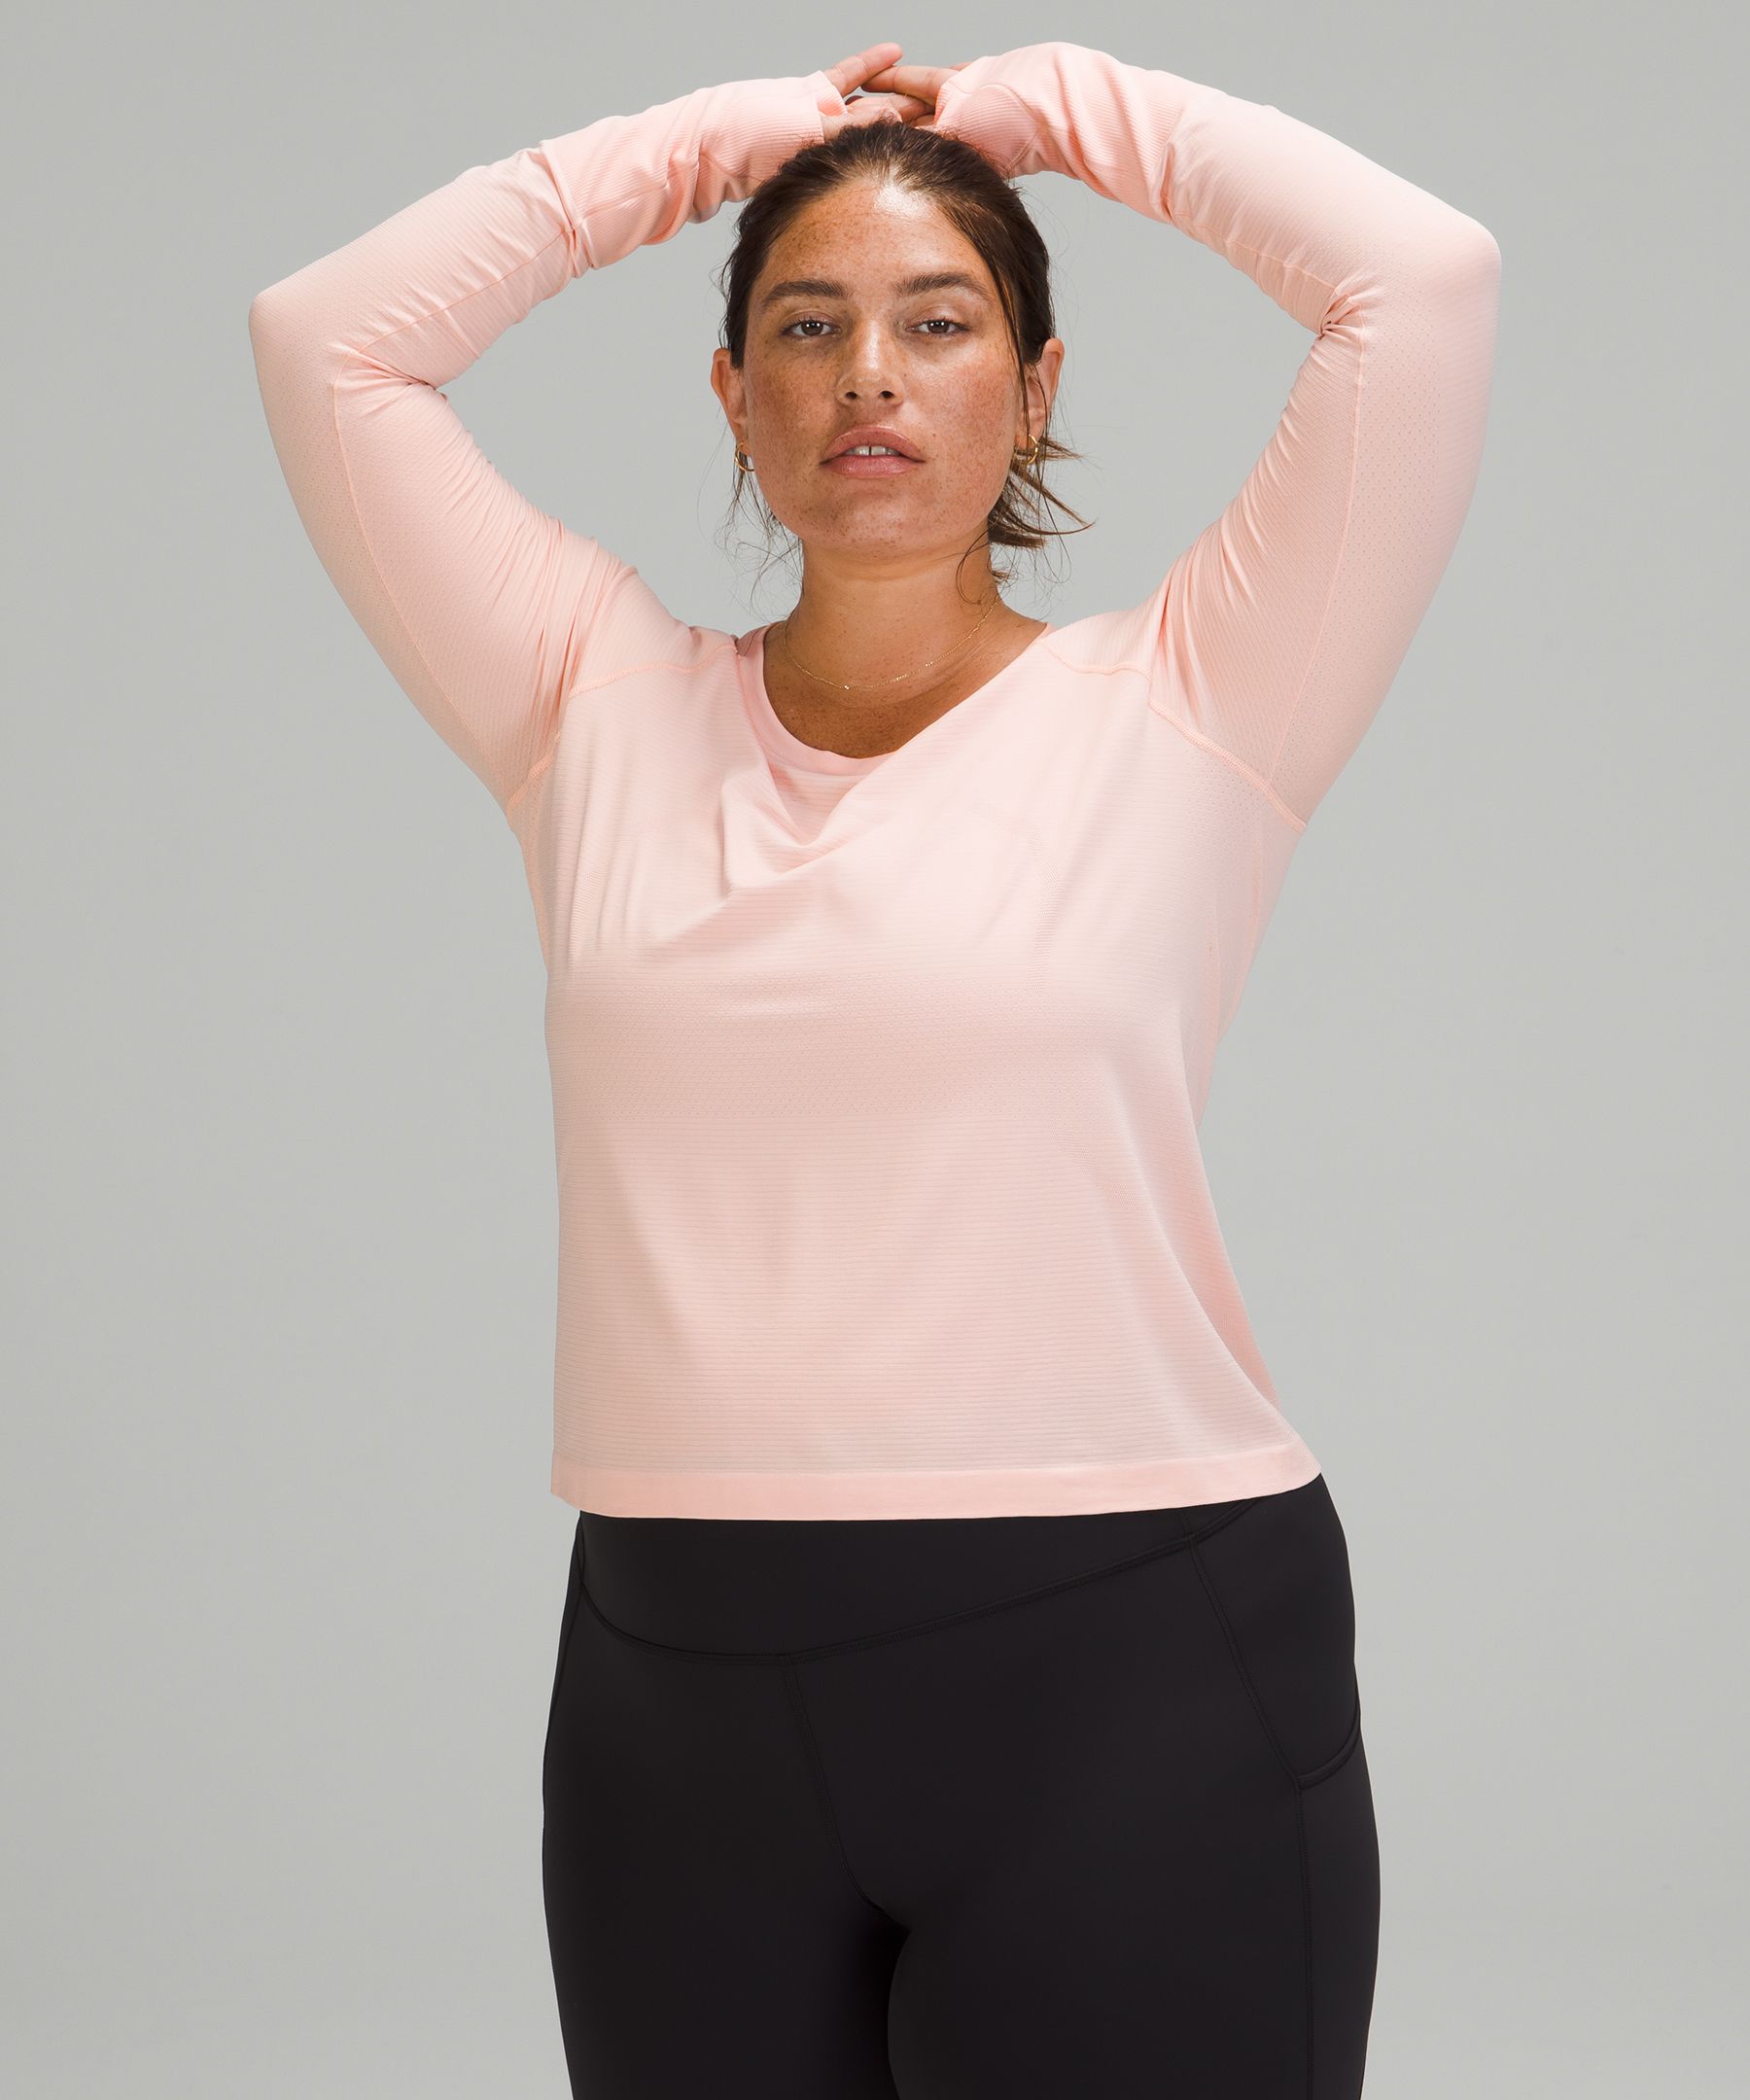 Lululemon Swiftly Tech Long Sleeve Shirt 2.0 Race Length In Pink Mist